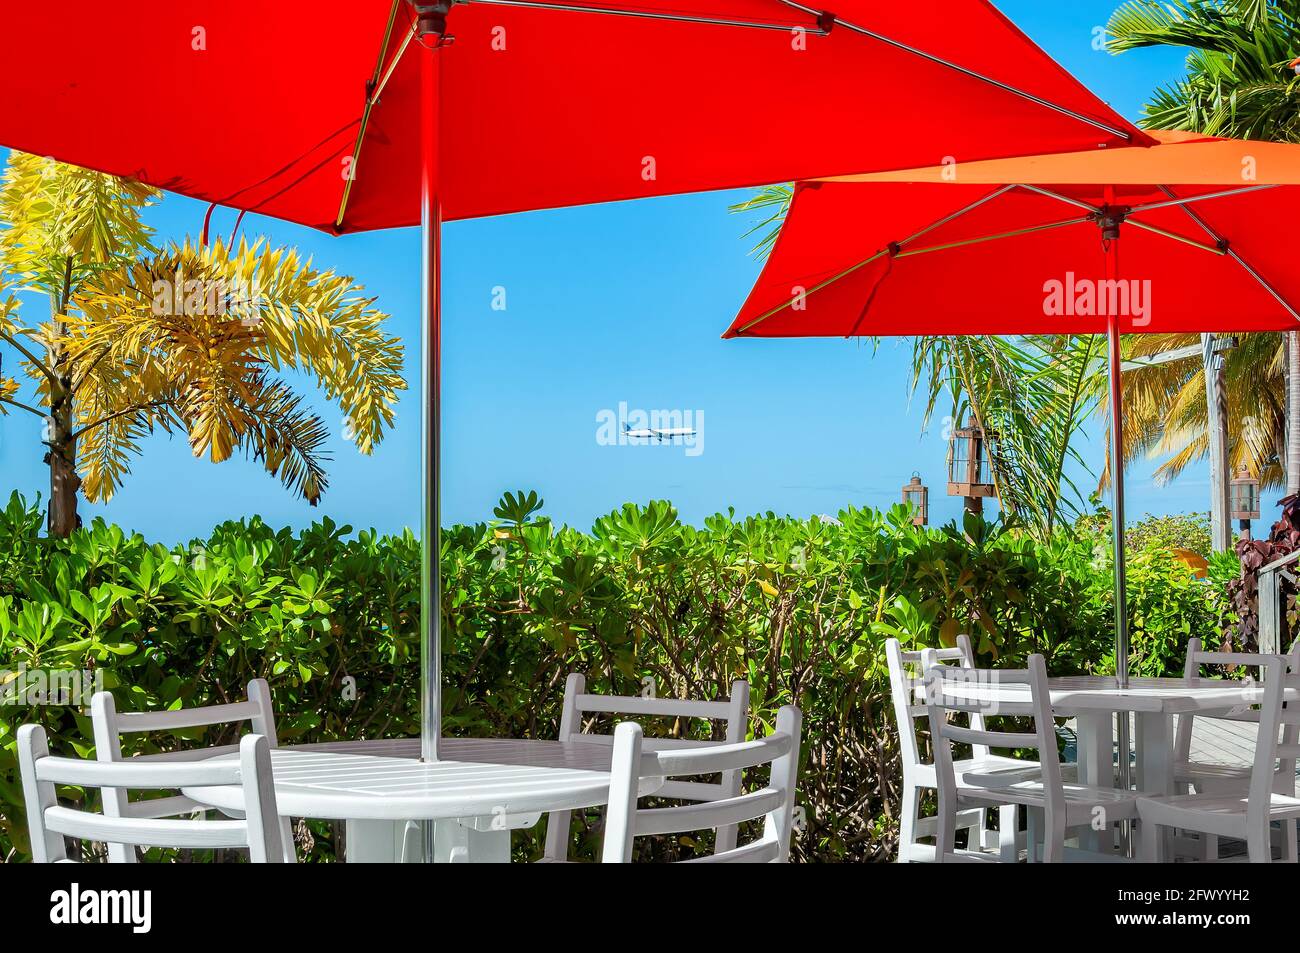 Beach cafe nell'isola tropicale dei Caraibi, Giamaica Foto Stock